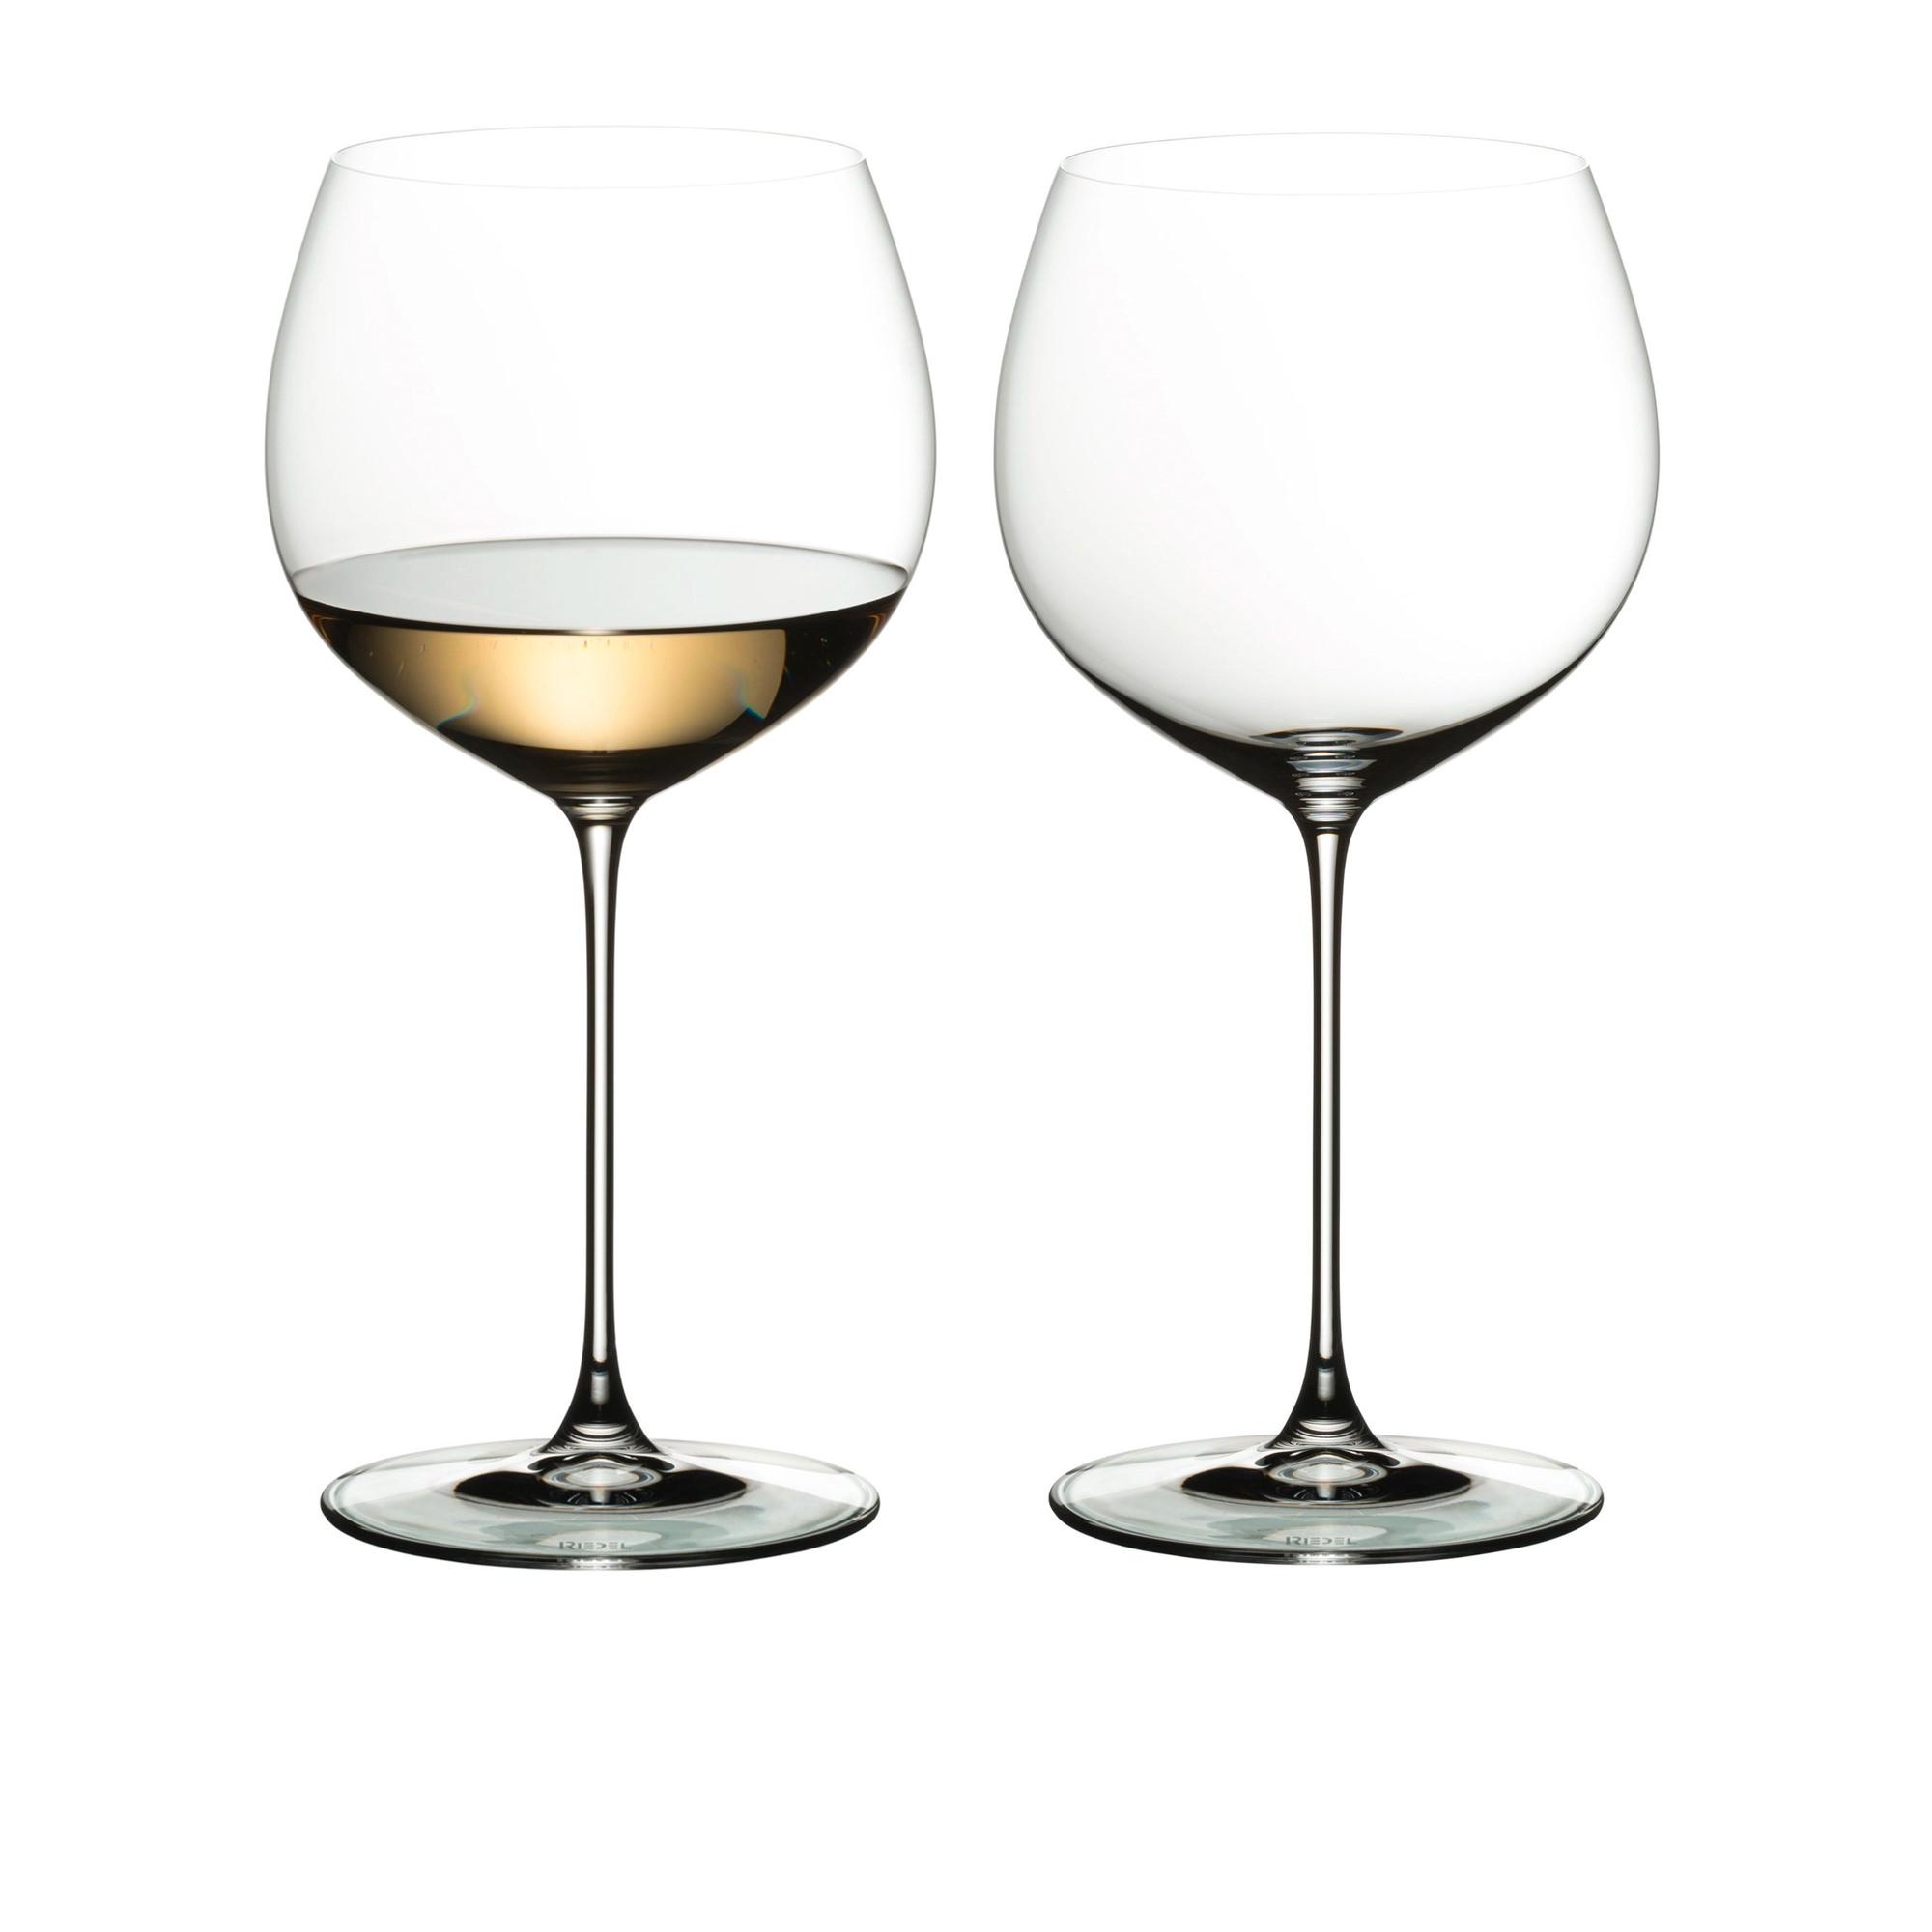 Riedel Veritas Oaked Chardonnay Wine Glass 620ml Set of 2 Image 1